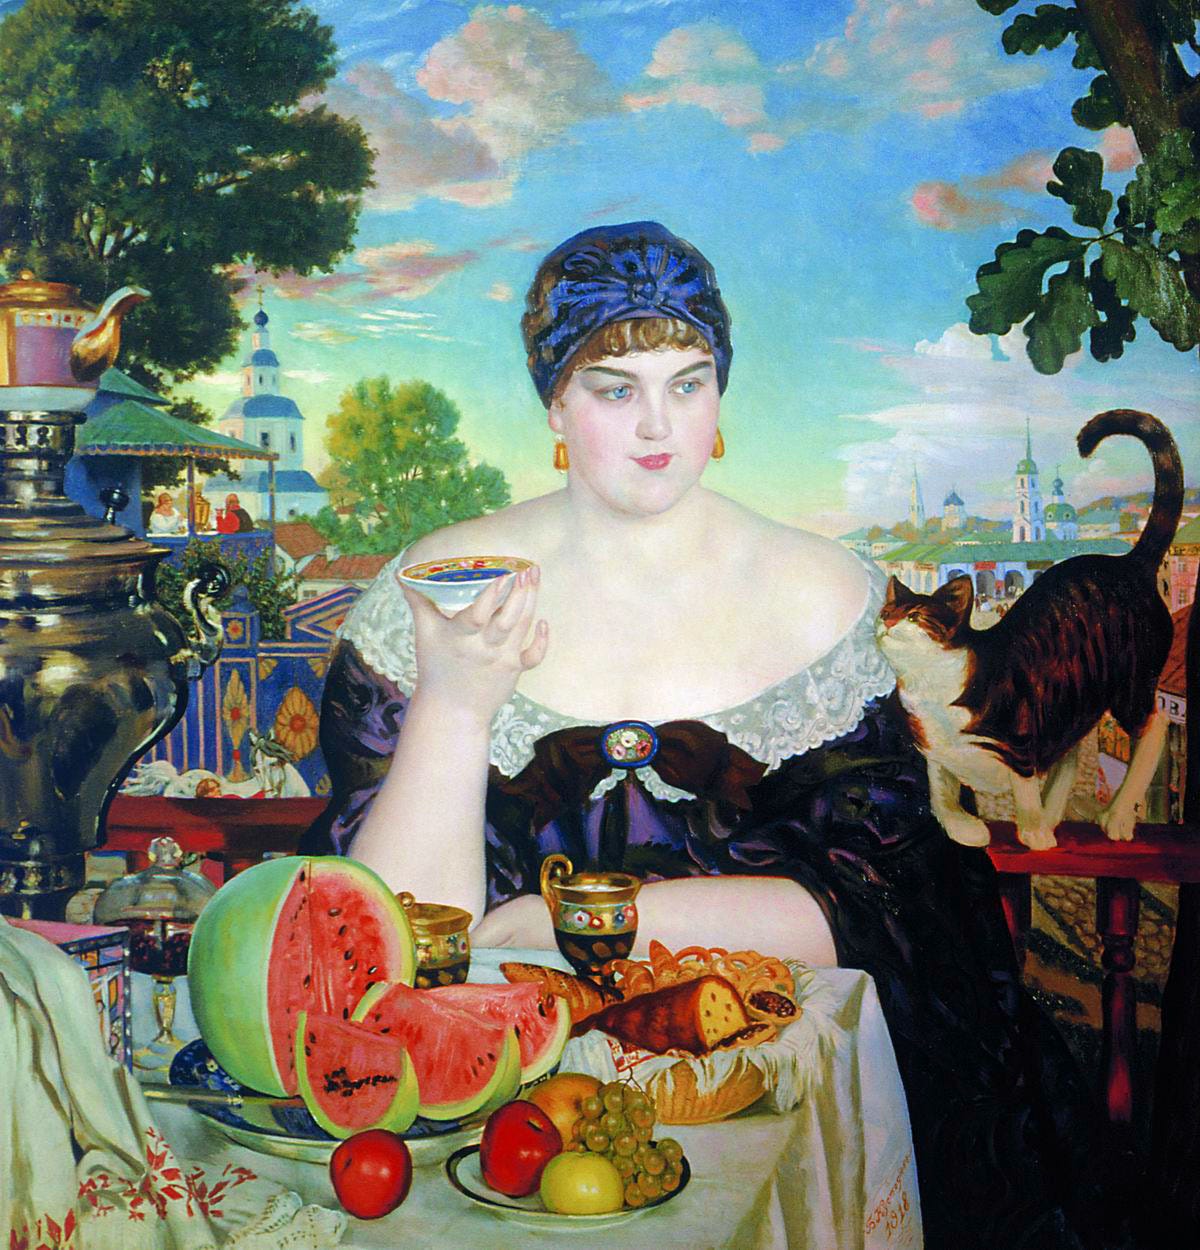 artist-kustodiev:
“The Merchant’s Wife at Tea, 1918, Boris Kustodiev
Medium: oil,canvas”